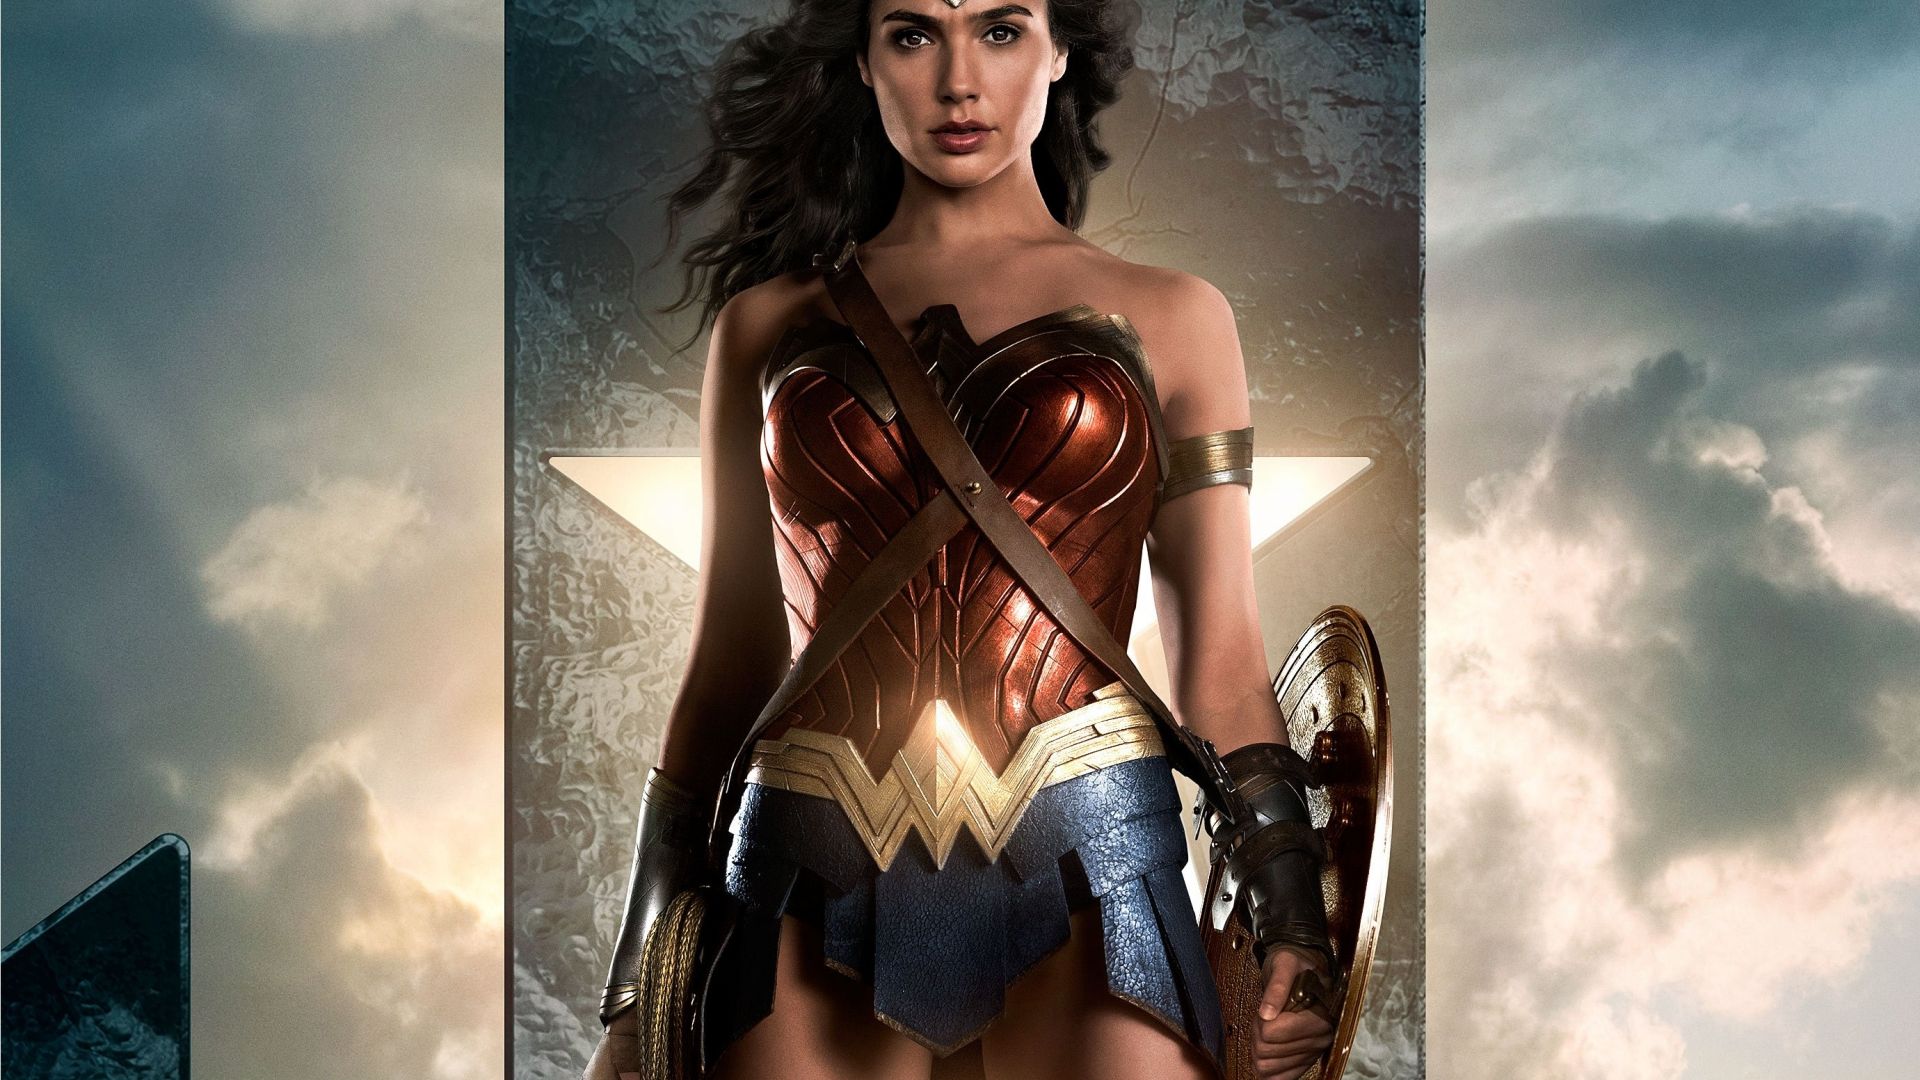 Wallpaper Gal Gadot, actress, Justice League, 2017 movie, wonder woman, superhero